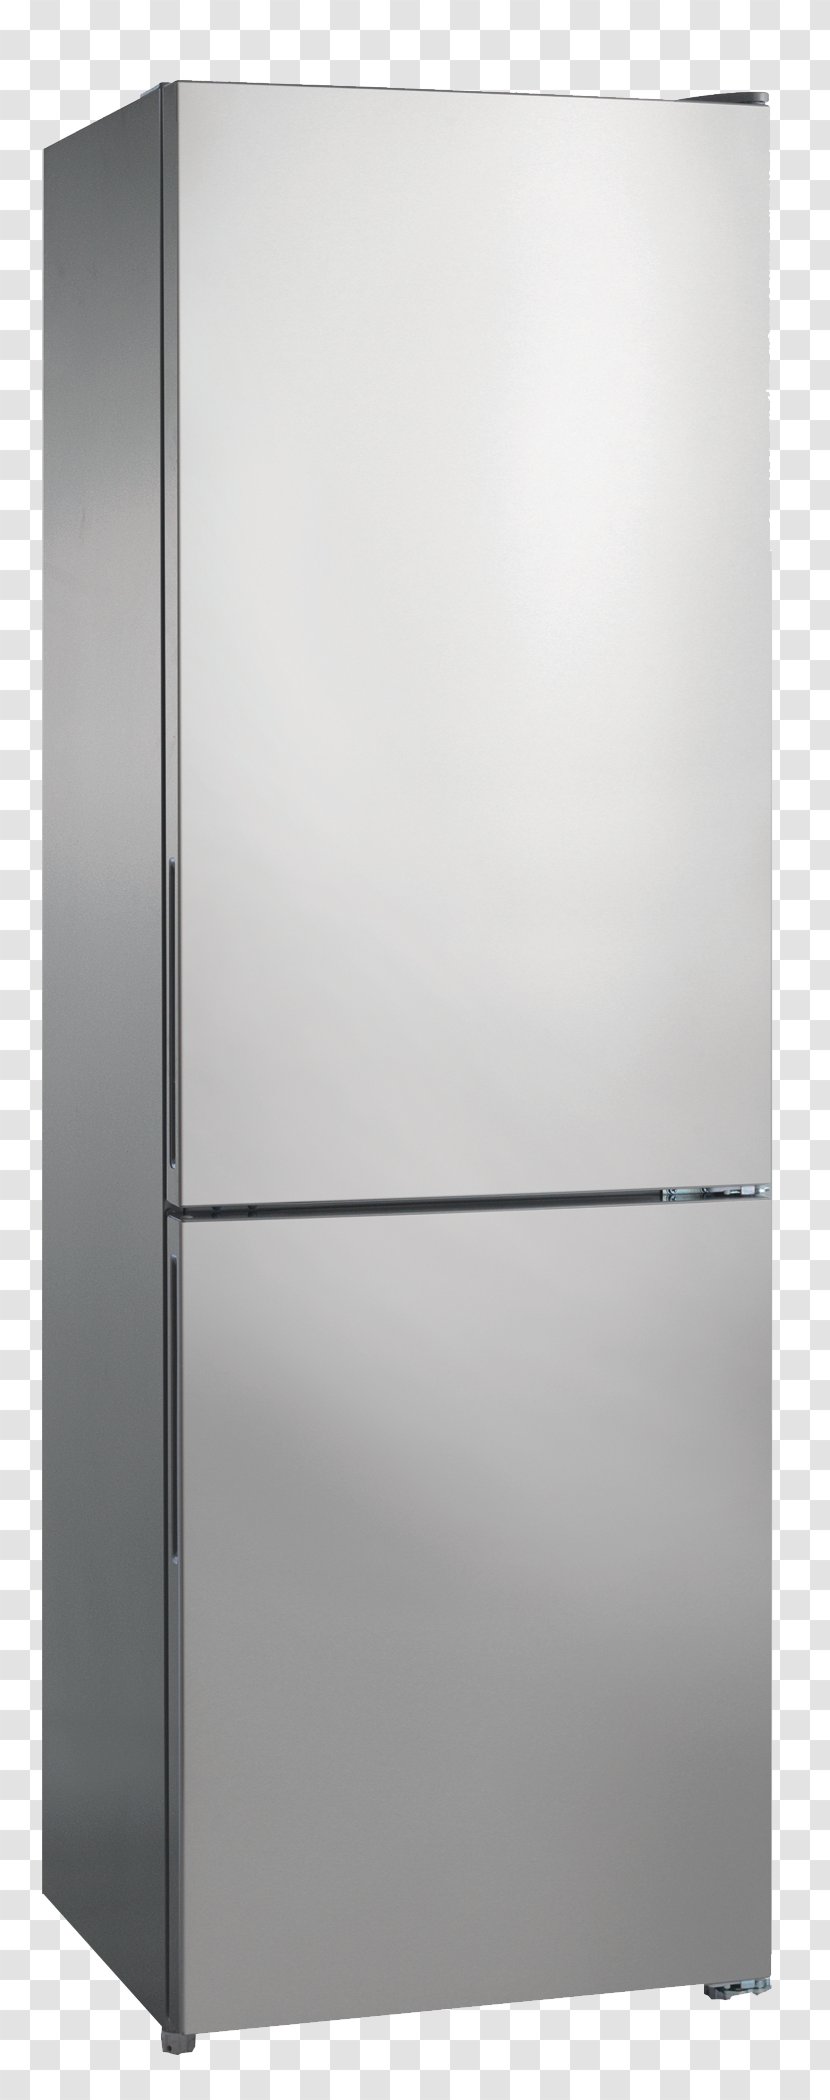 Refrigerator Freezers KOEL-VRIESCOMBI-Miele Gorenje Armoires & Wardrobes - Major Appliance Transparent PNG